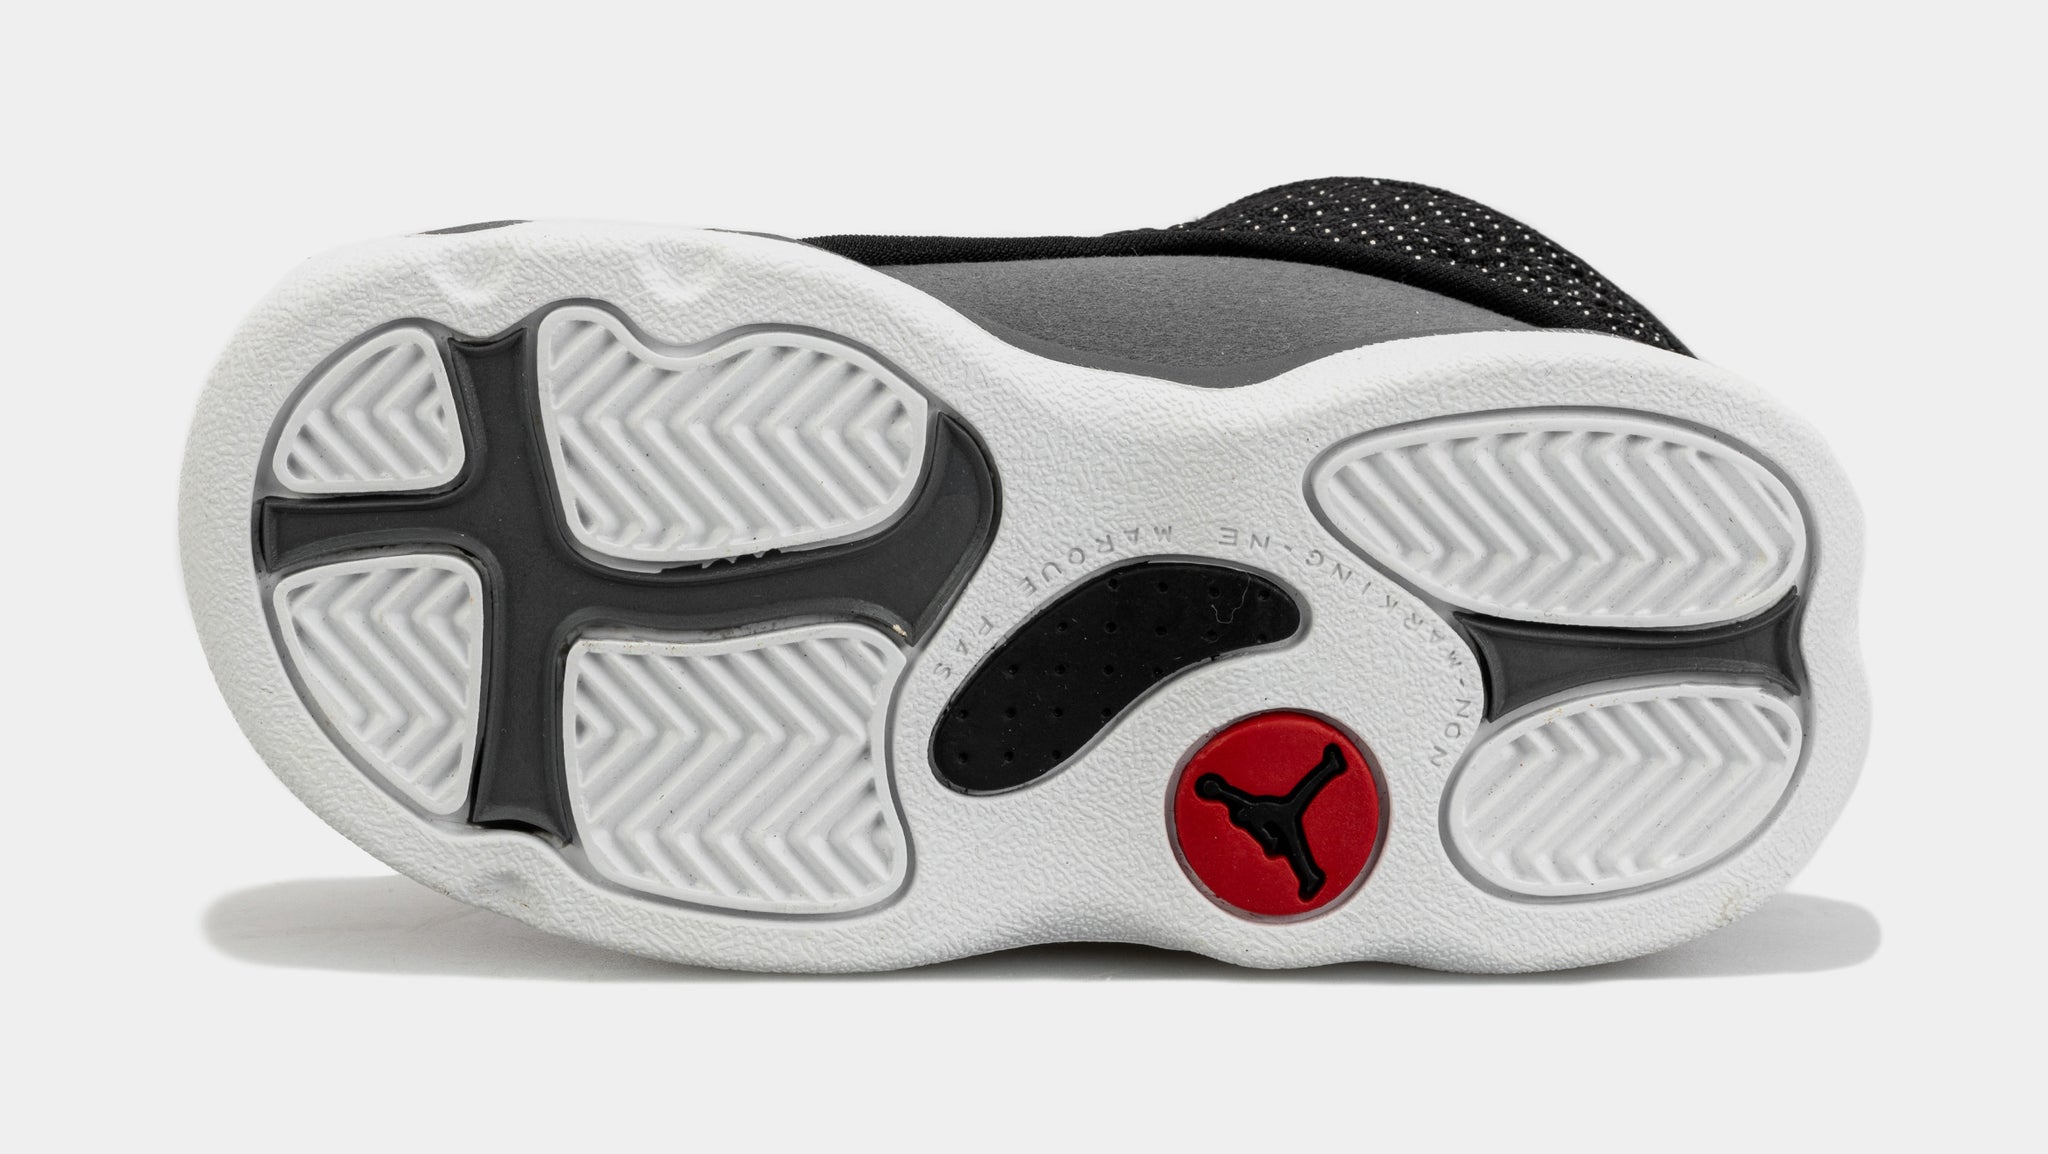 Available Now] Buy New Air Jordan 13 Black White